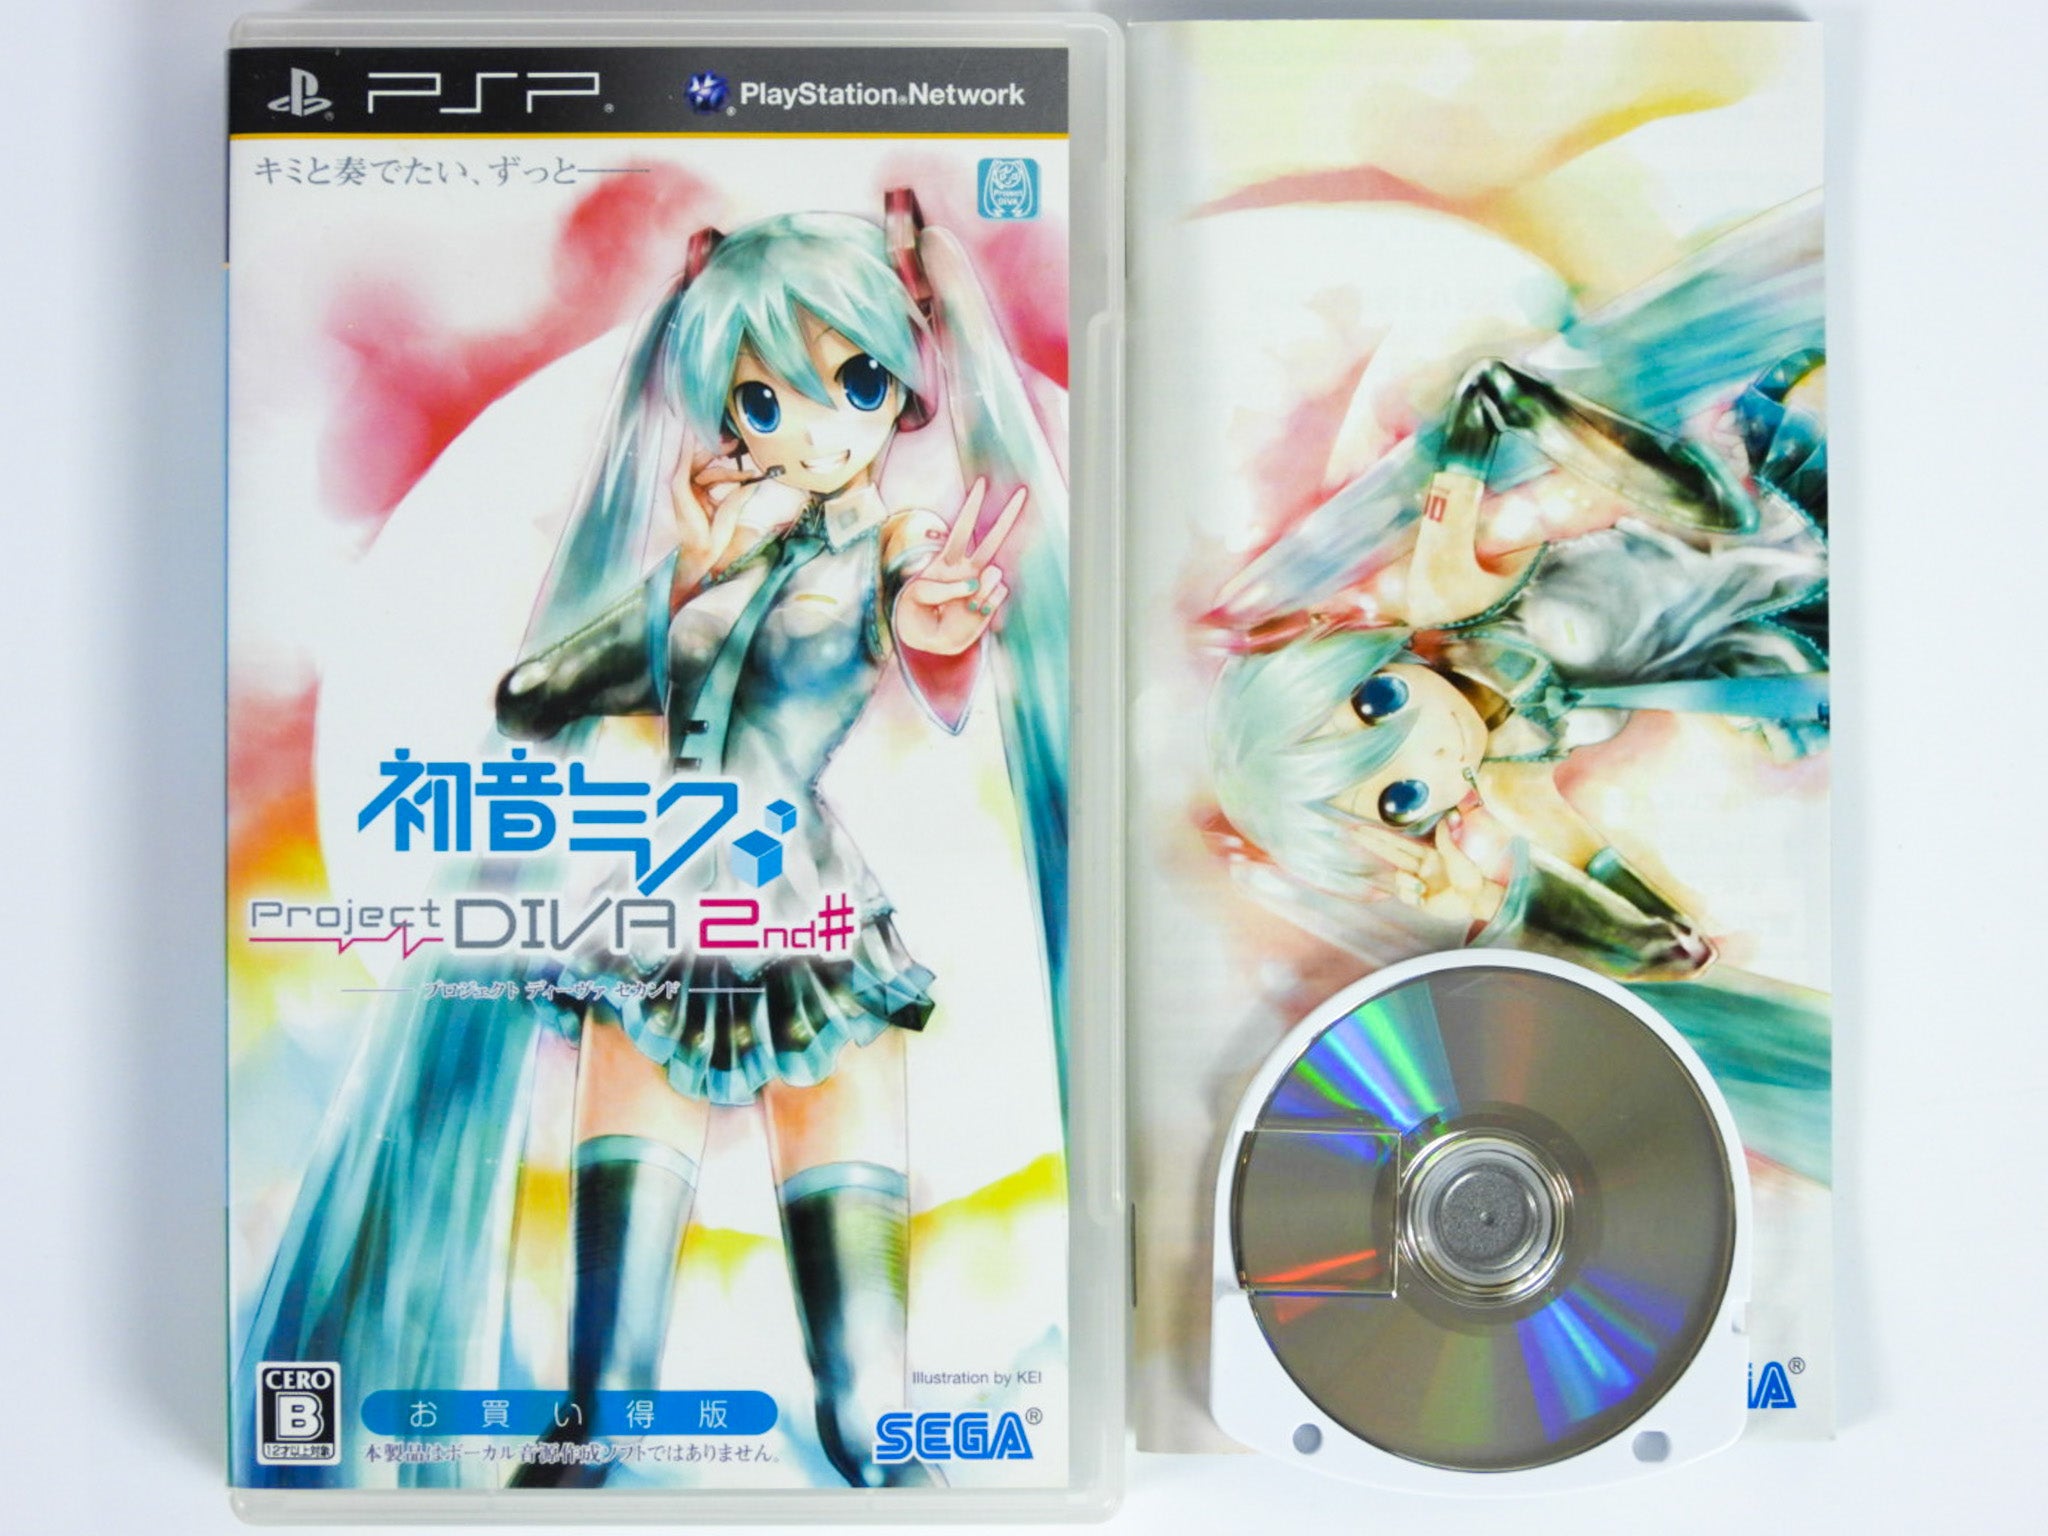 Hatsune Miku: Project Diva 2nd [JP Import] (Playstation Portable